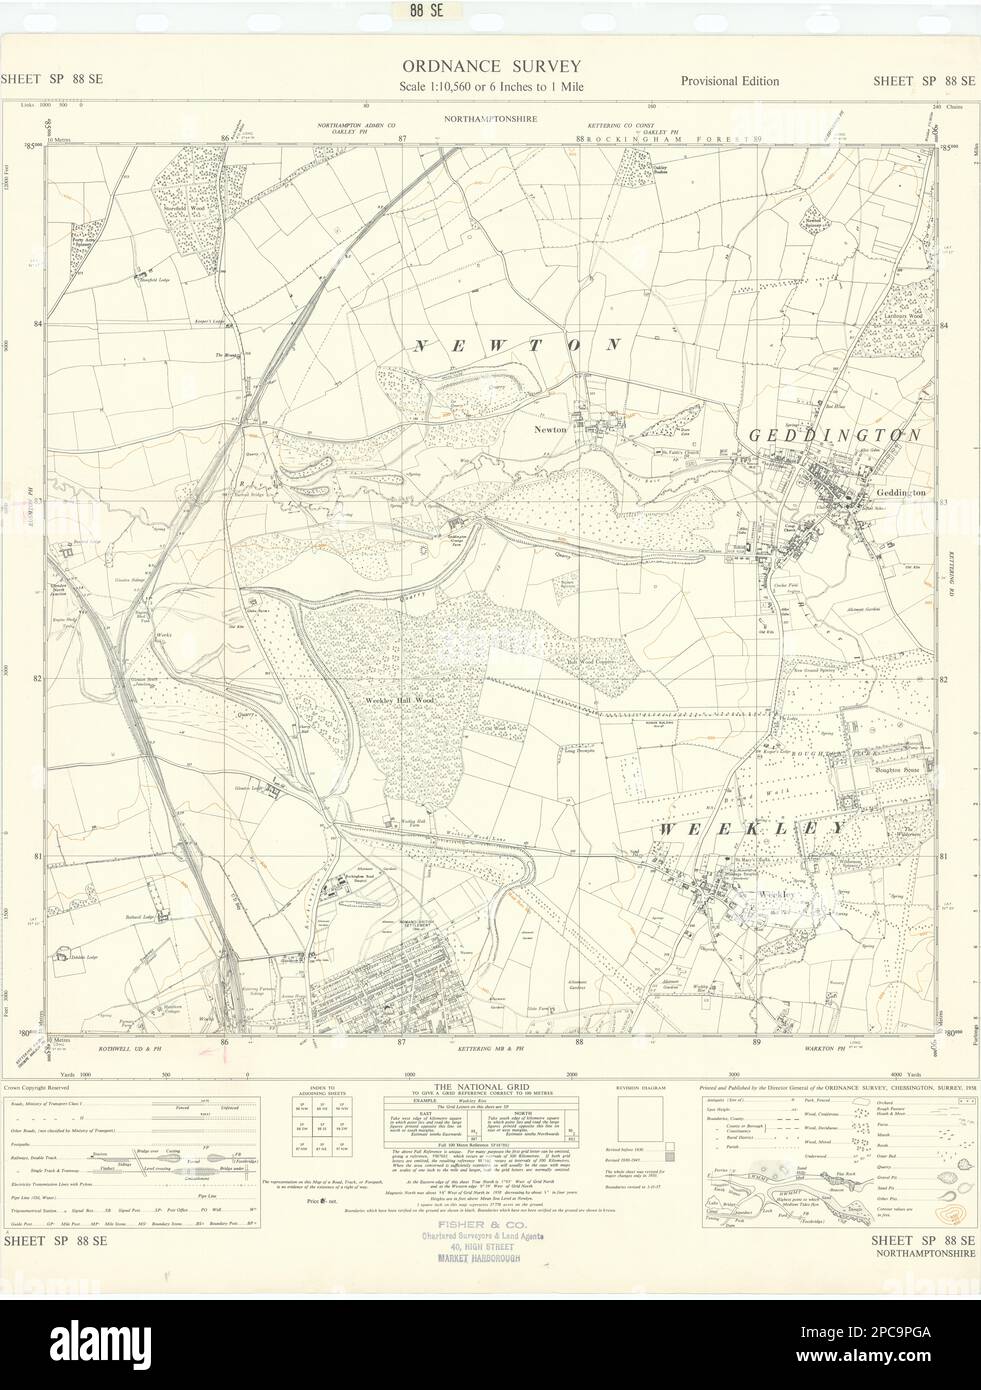 Ordnance Survey SP88SE Northamptonshire Kettering Geddington Weekley 1958 mapa Foto de stock